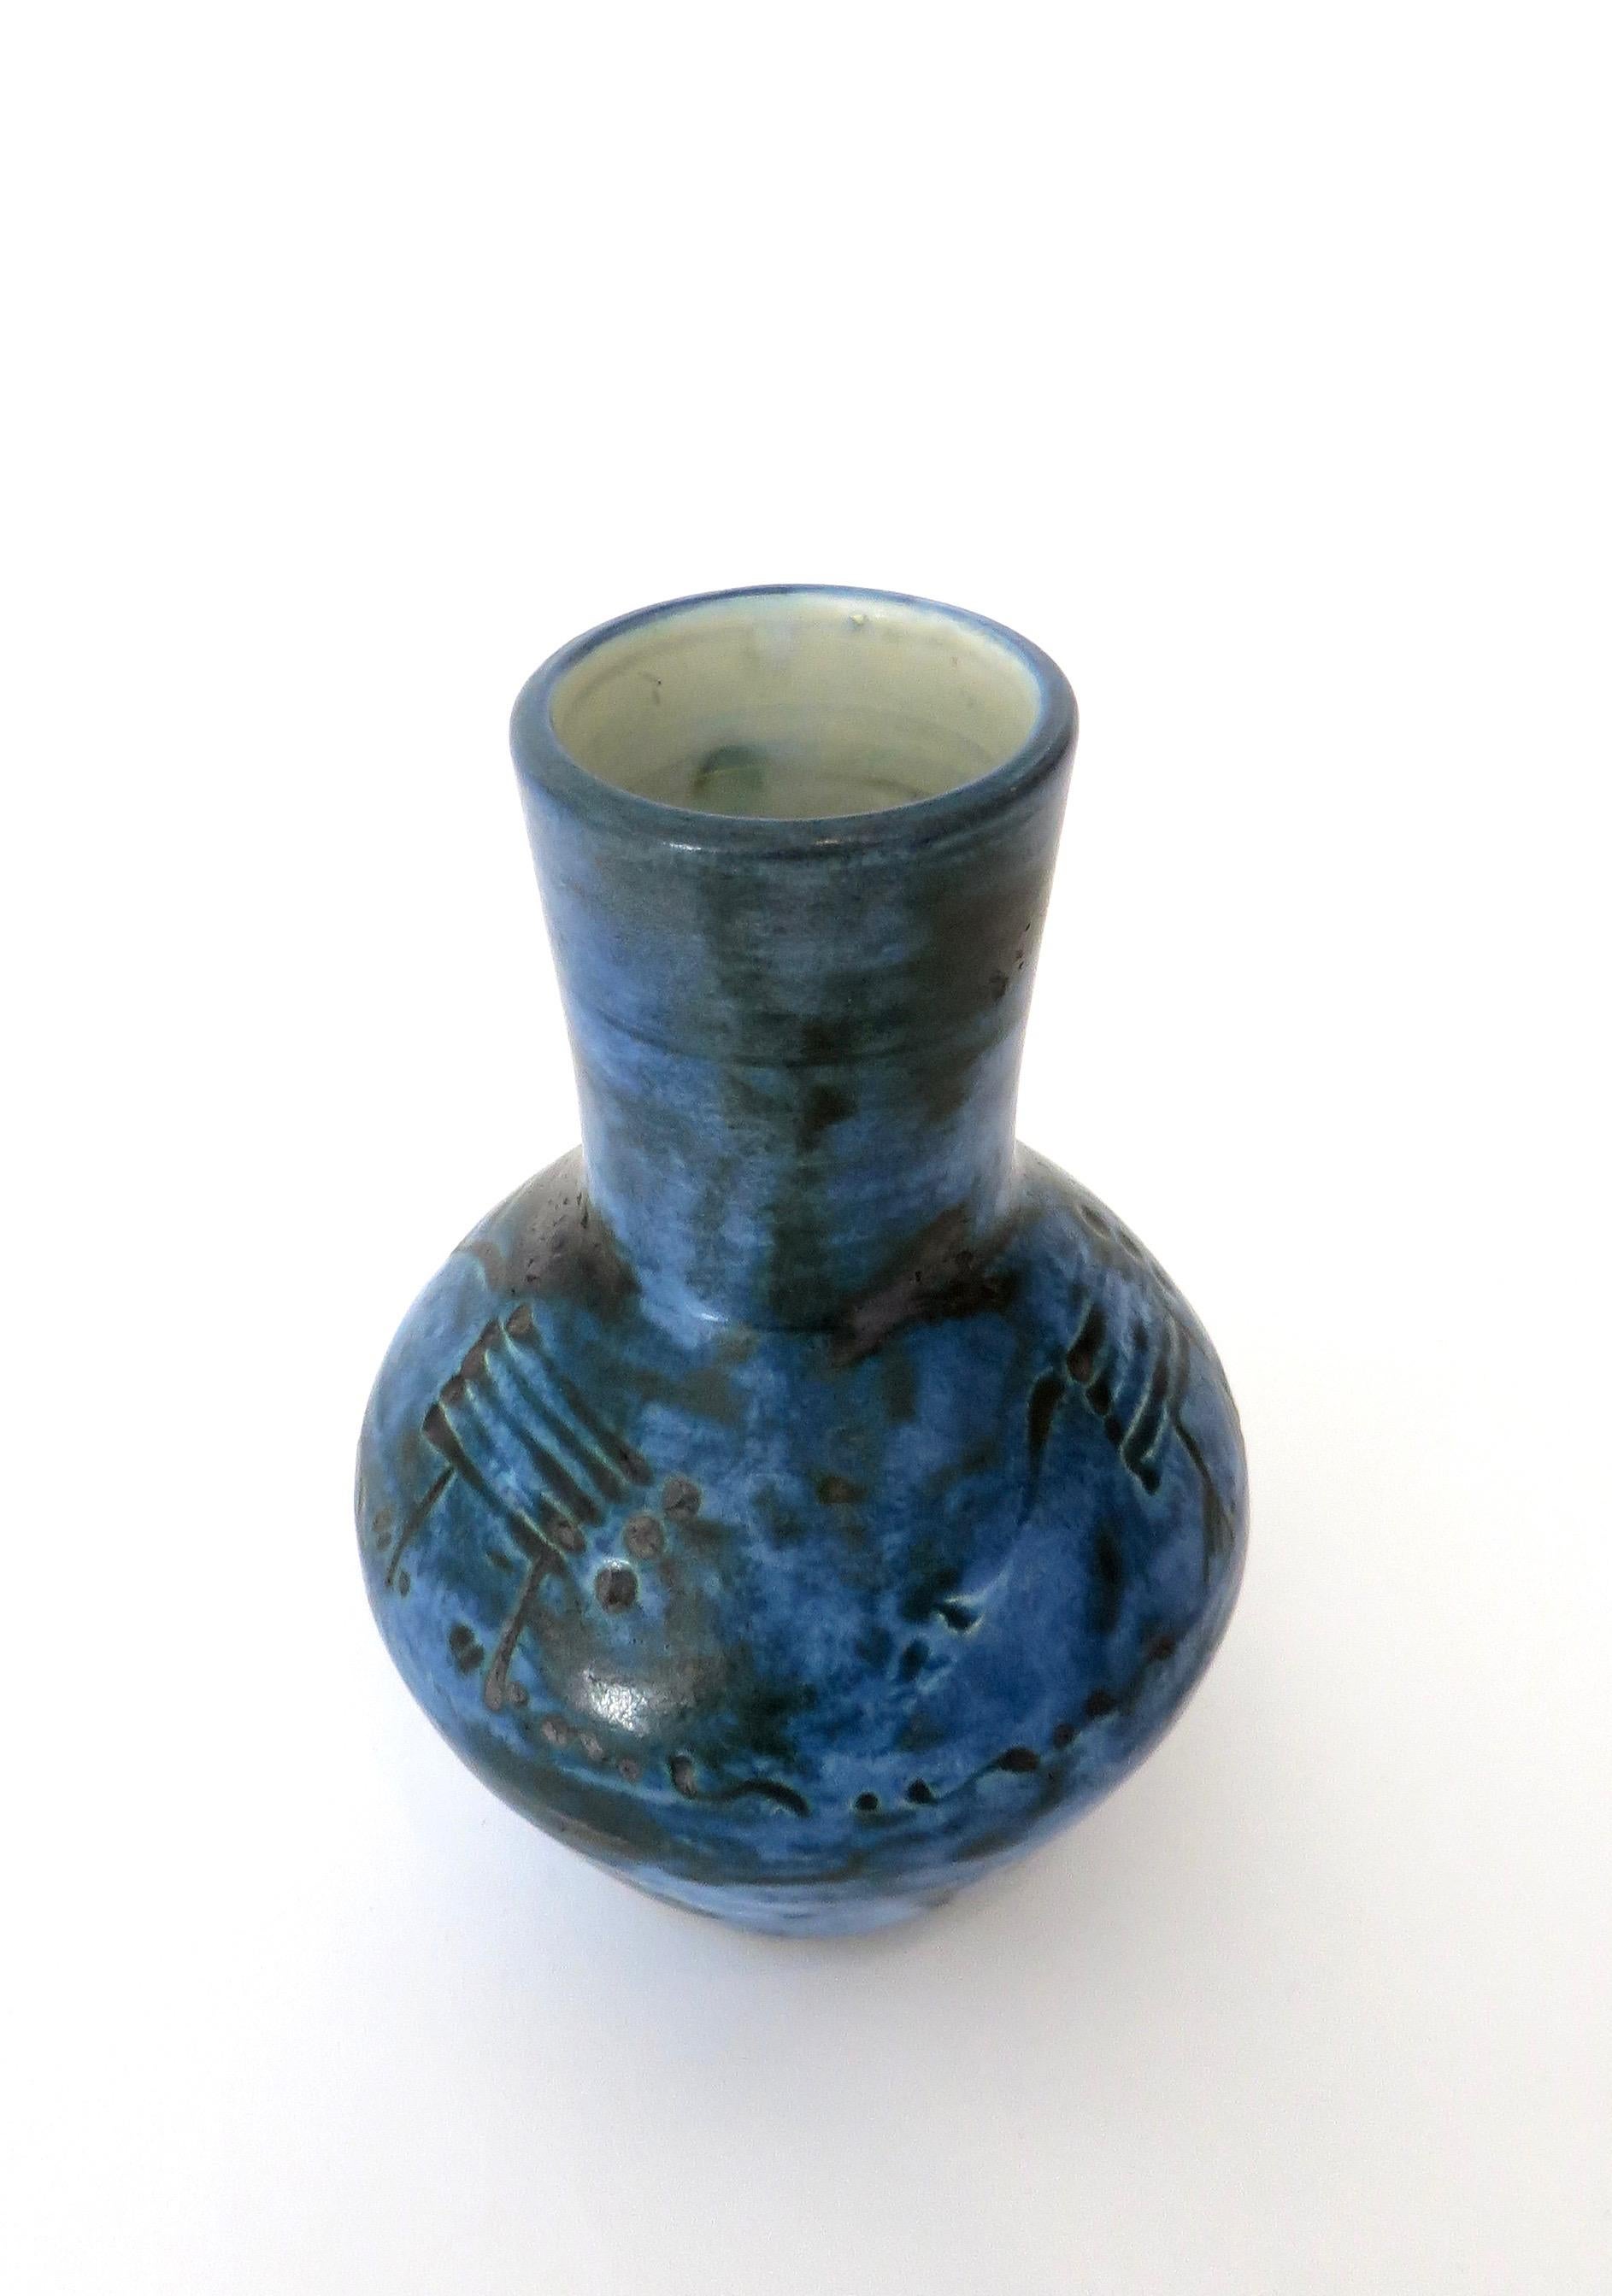  Jacques Blin French Dark Blue Ceramic Ceramic Vase with Sgraffito Decoration 2